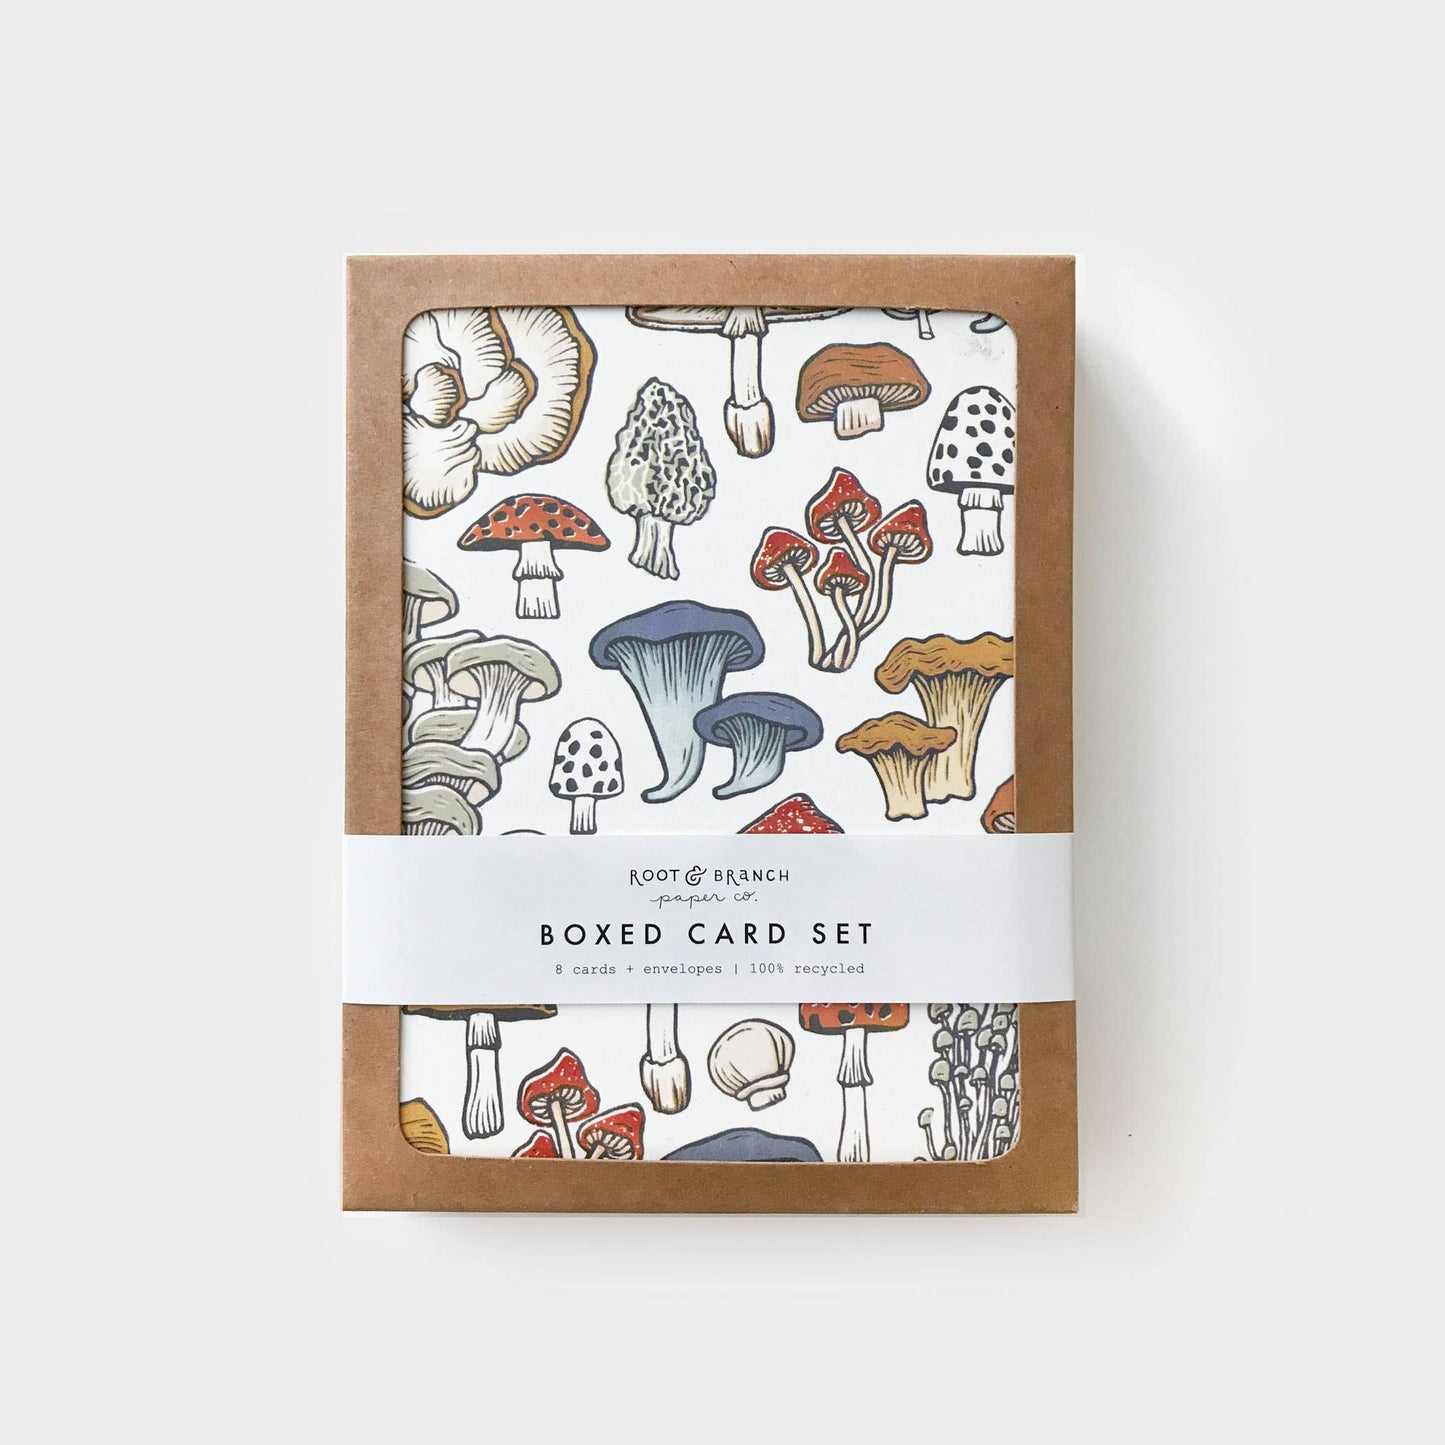 Mushroom boxed card set of 8 